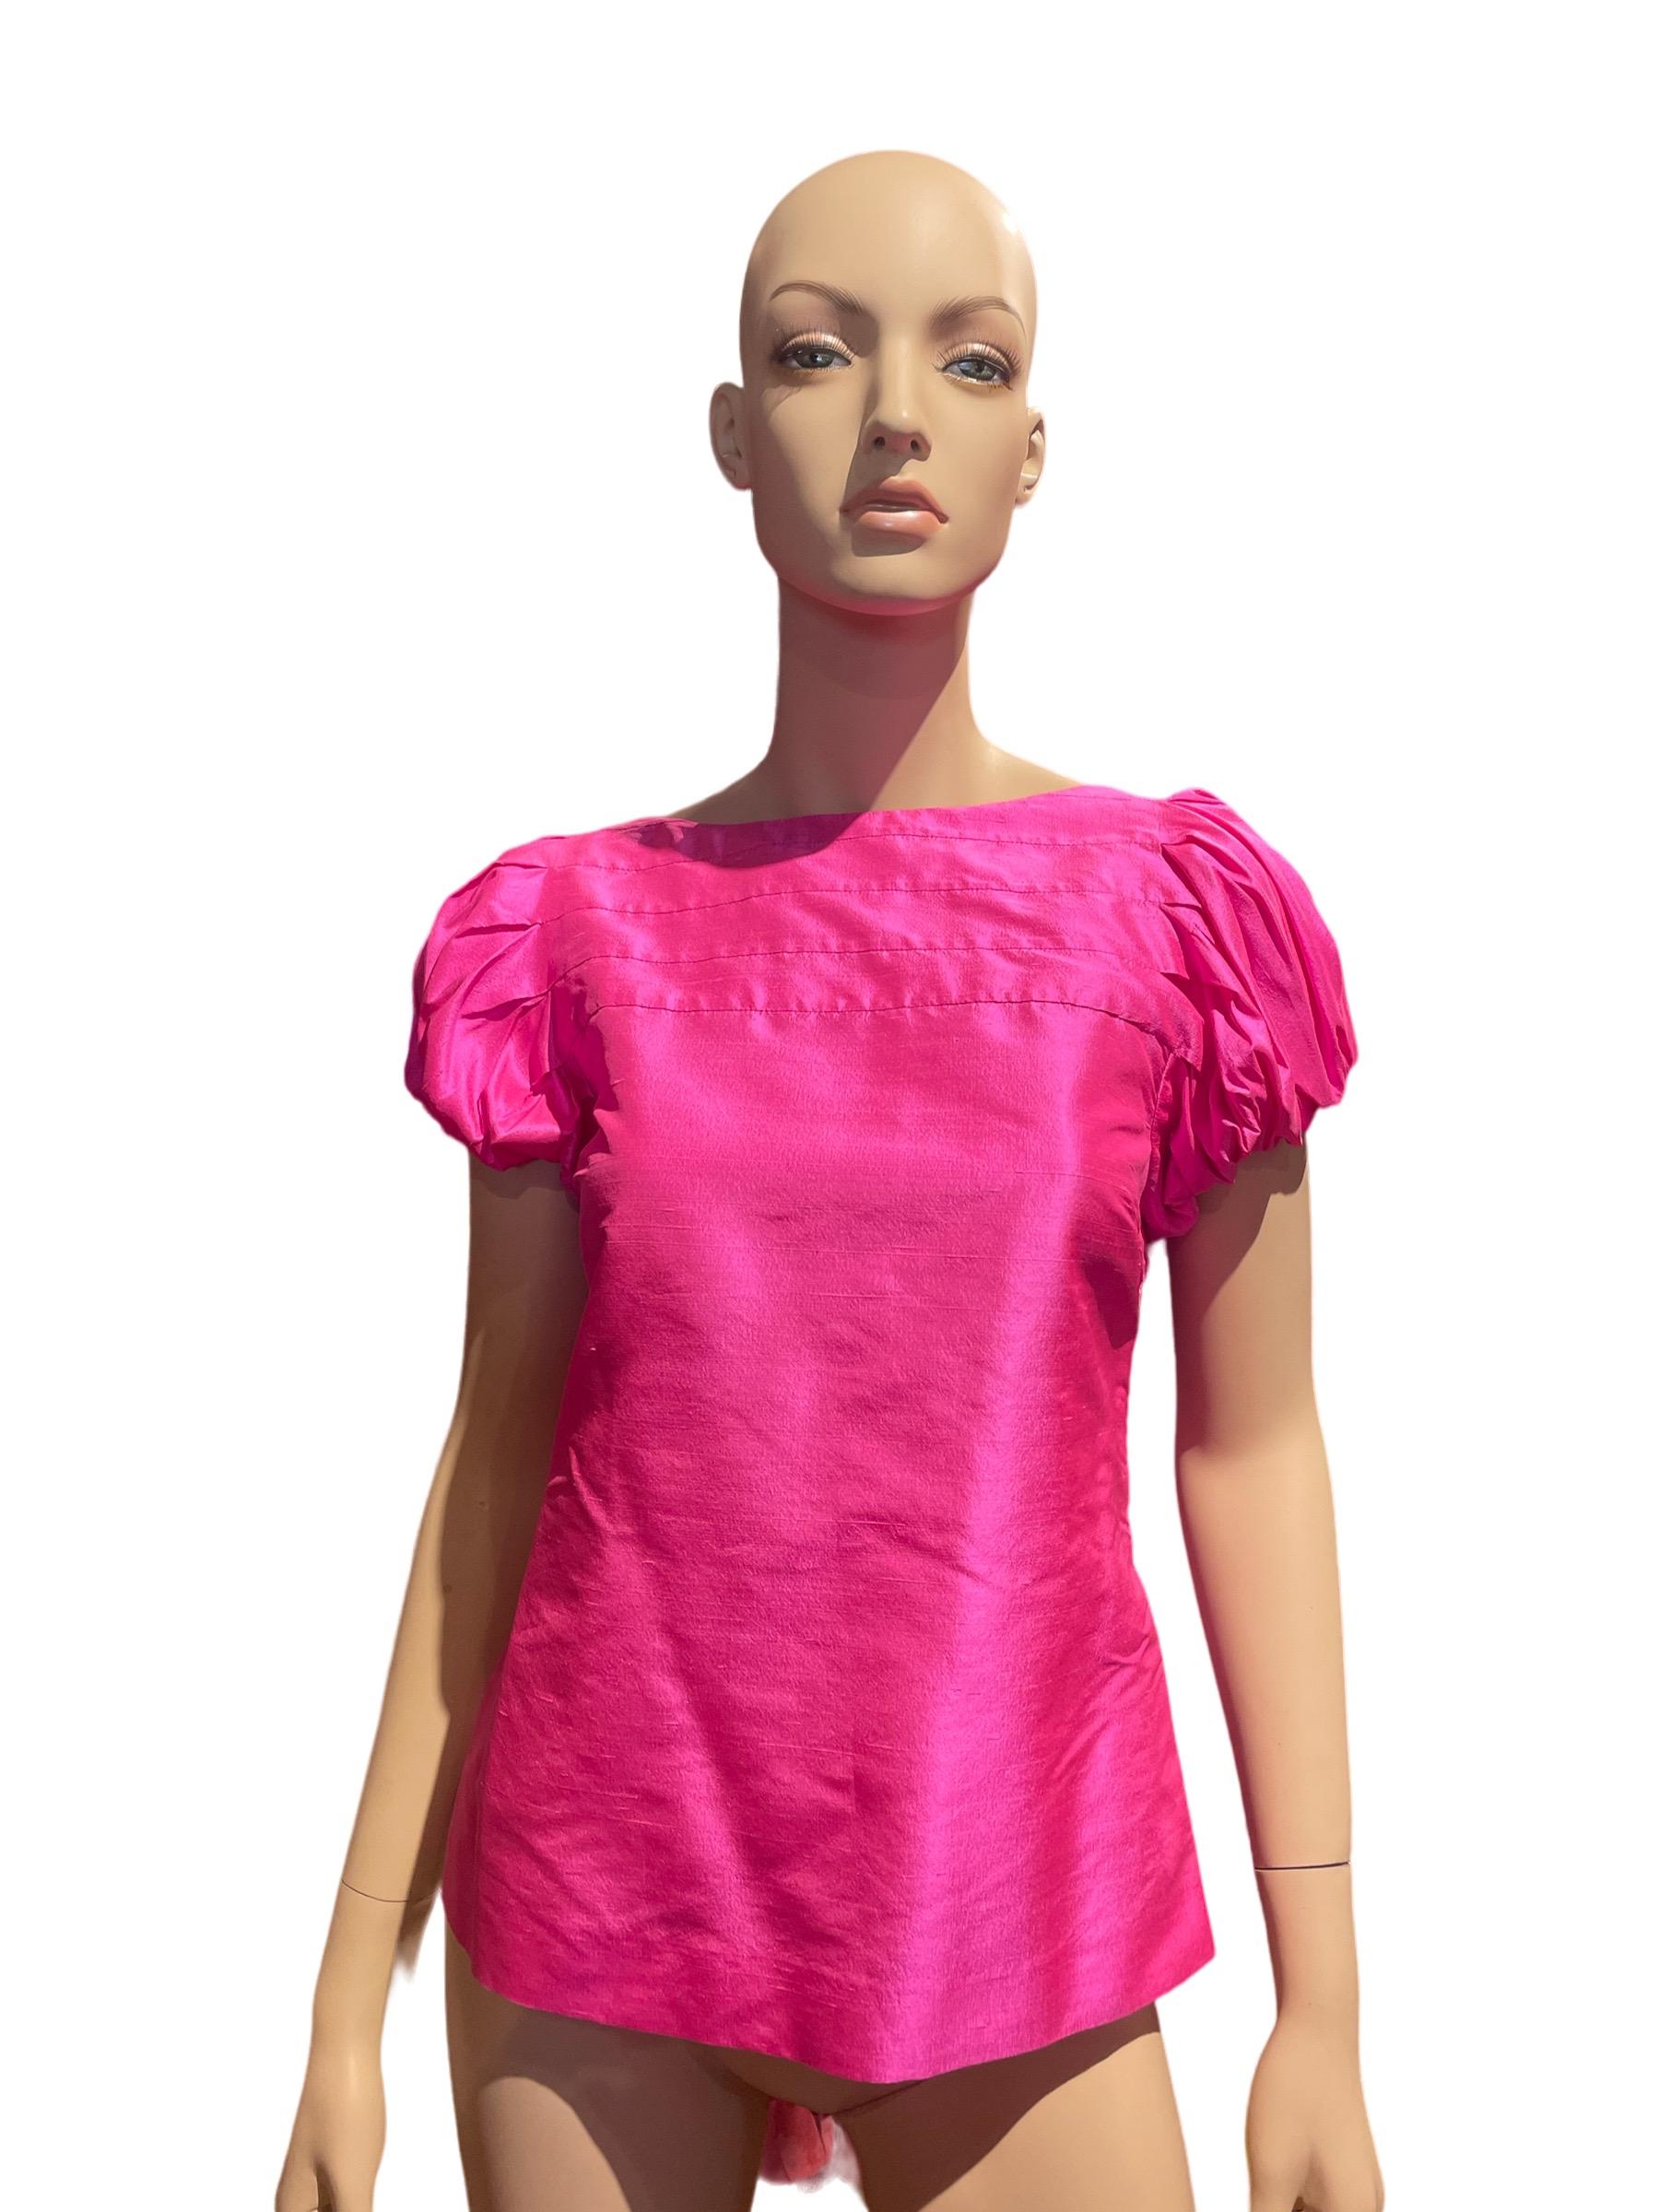 Vintage silk fuchsia pink short sleeve puff sleeve blouse by Ralph Lauren 

Excellent condition!

Bust: 34”
Waist: 30”
Length: 22.5” 
Shoulder: 20” across